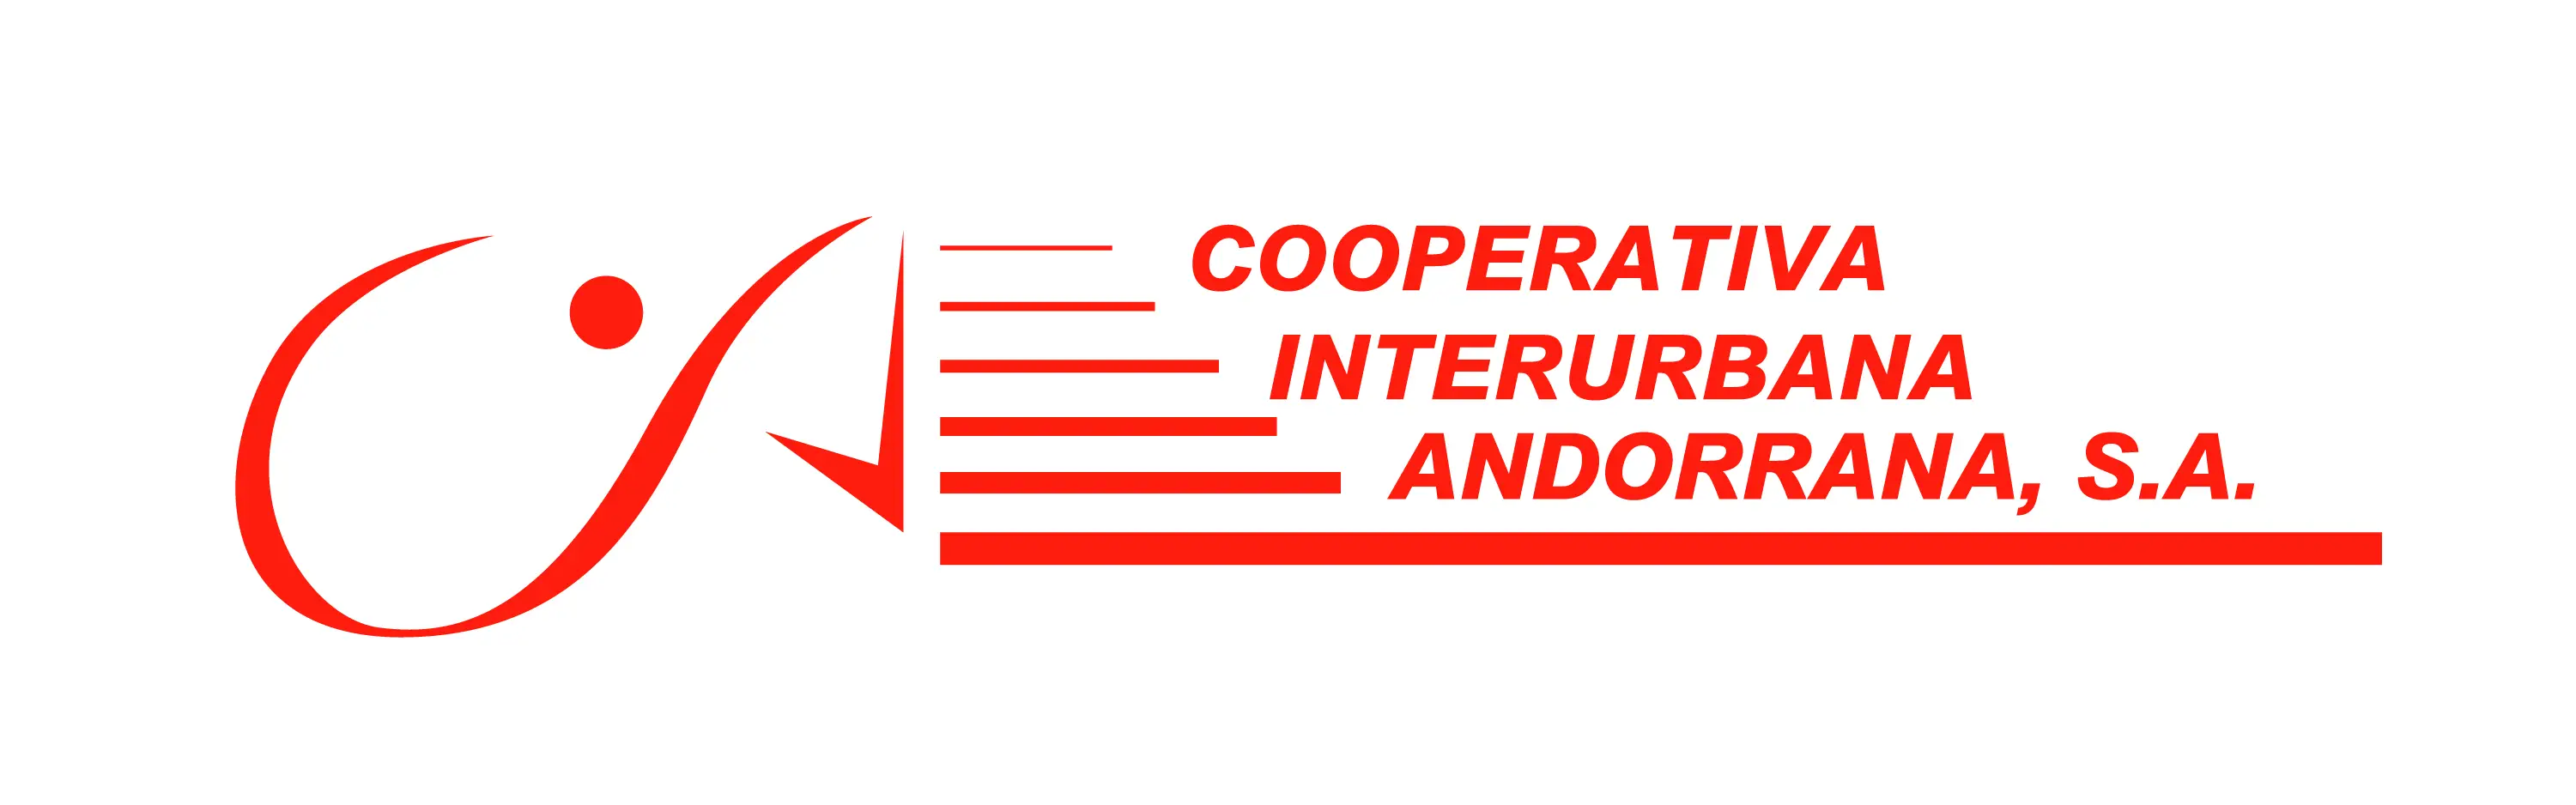 Cooperativa Interurbana Andorrana